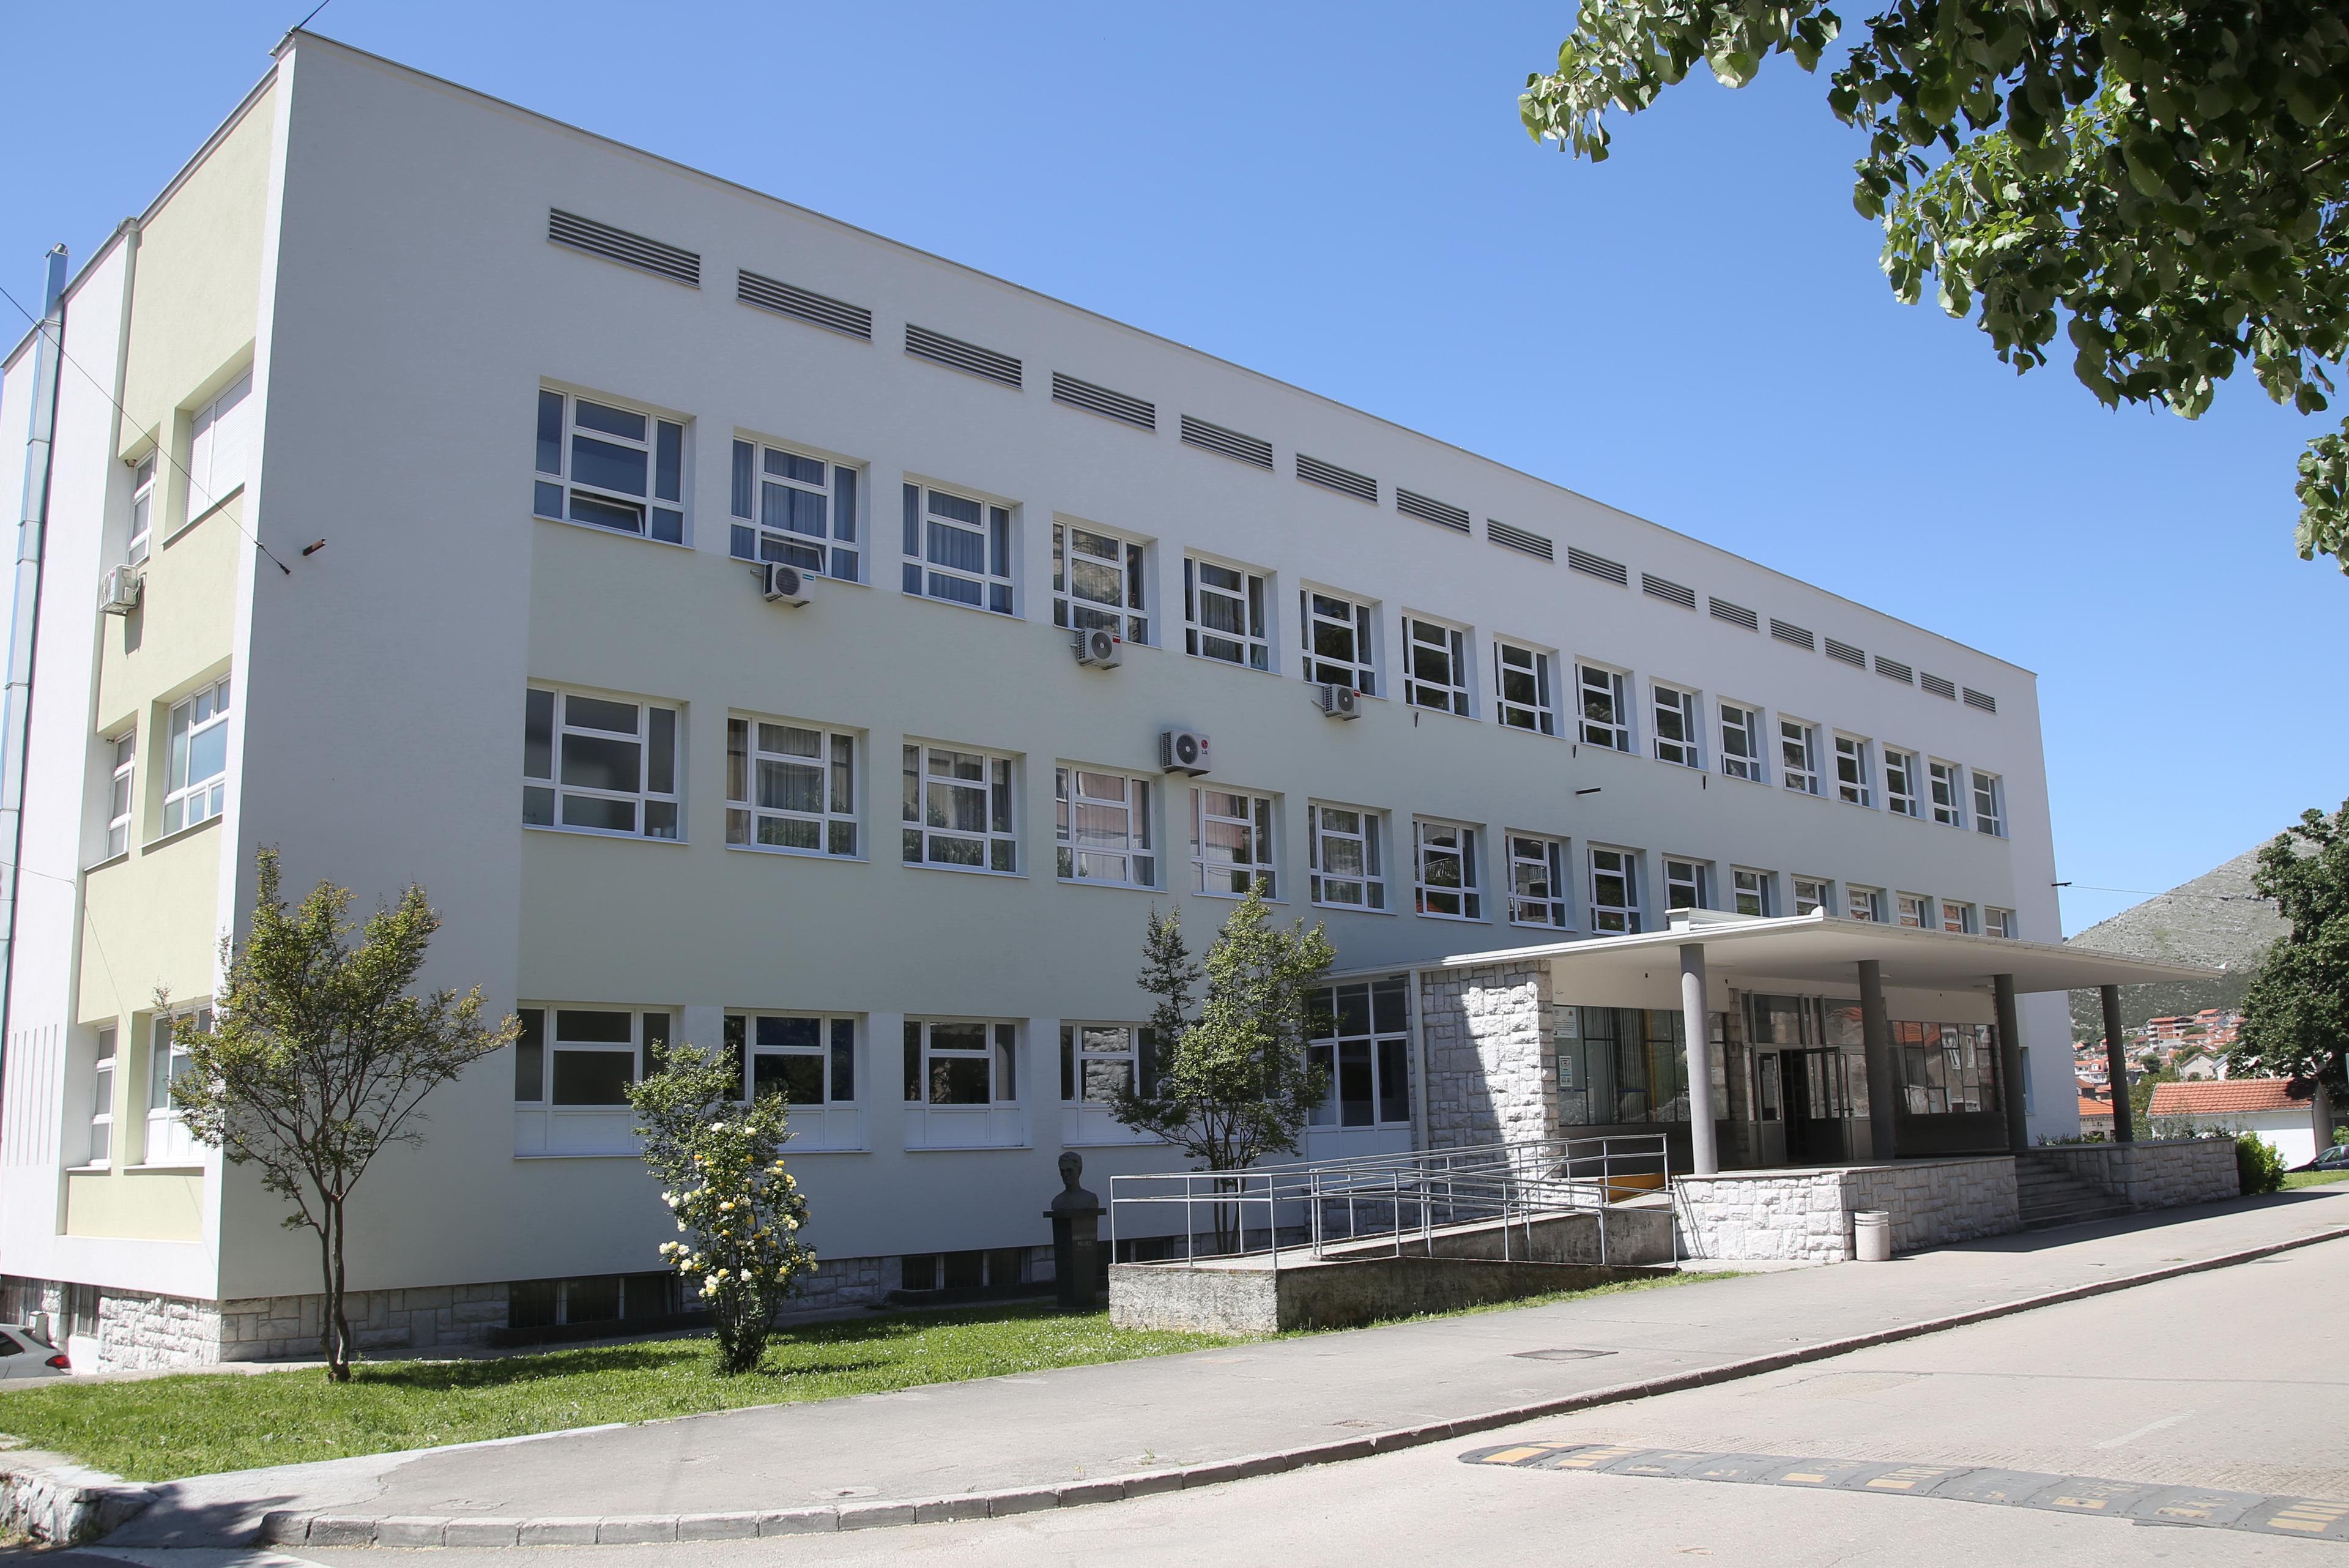 Srednjoškolski centar: Maturska večer neće biti održana - Avaz